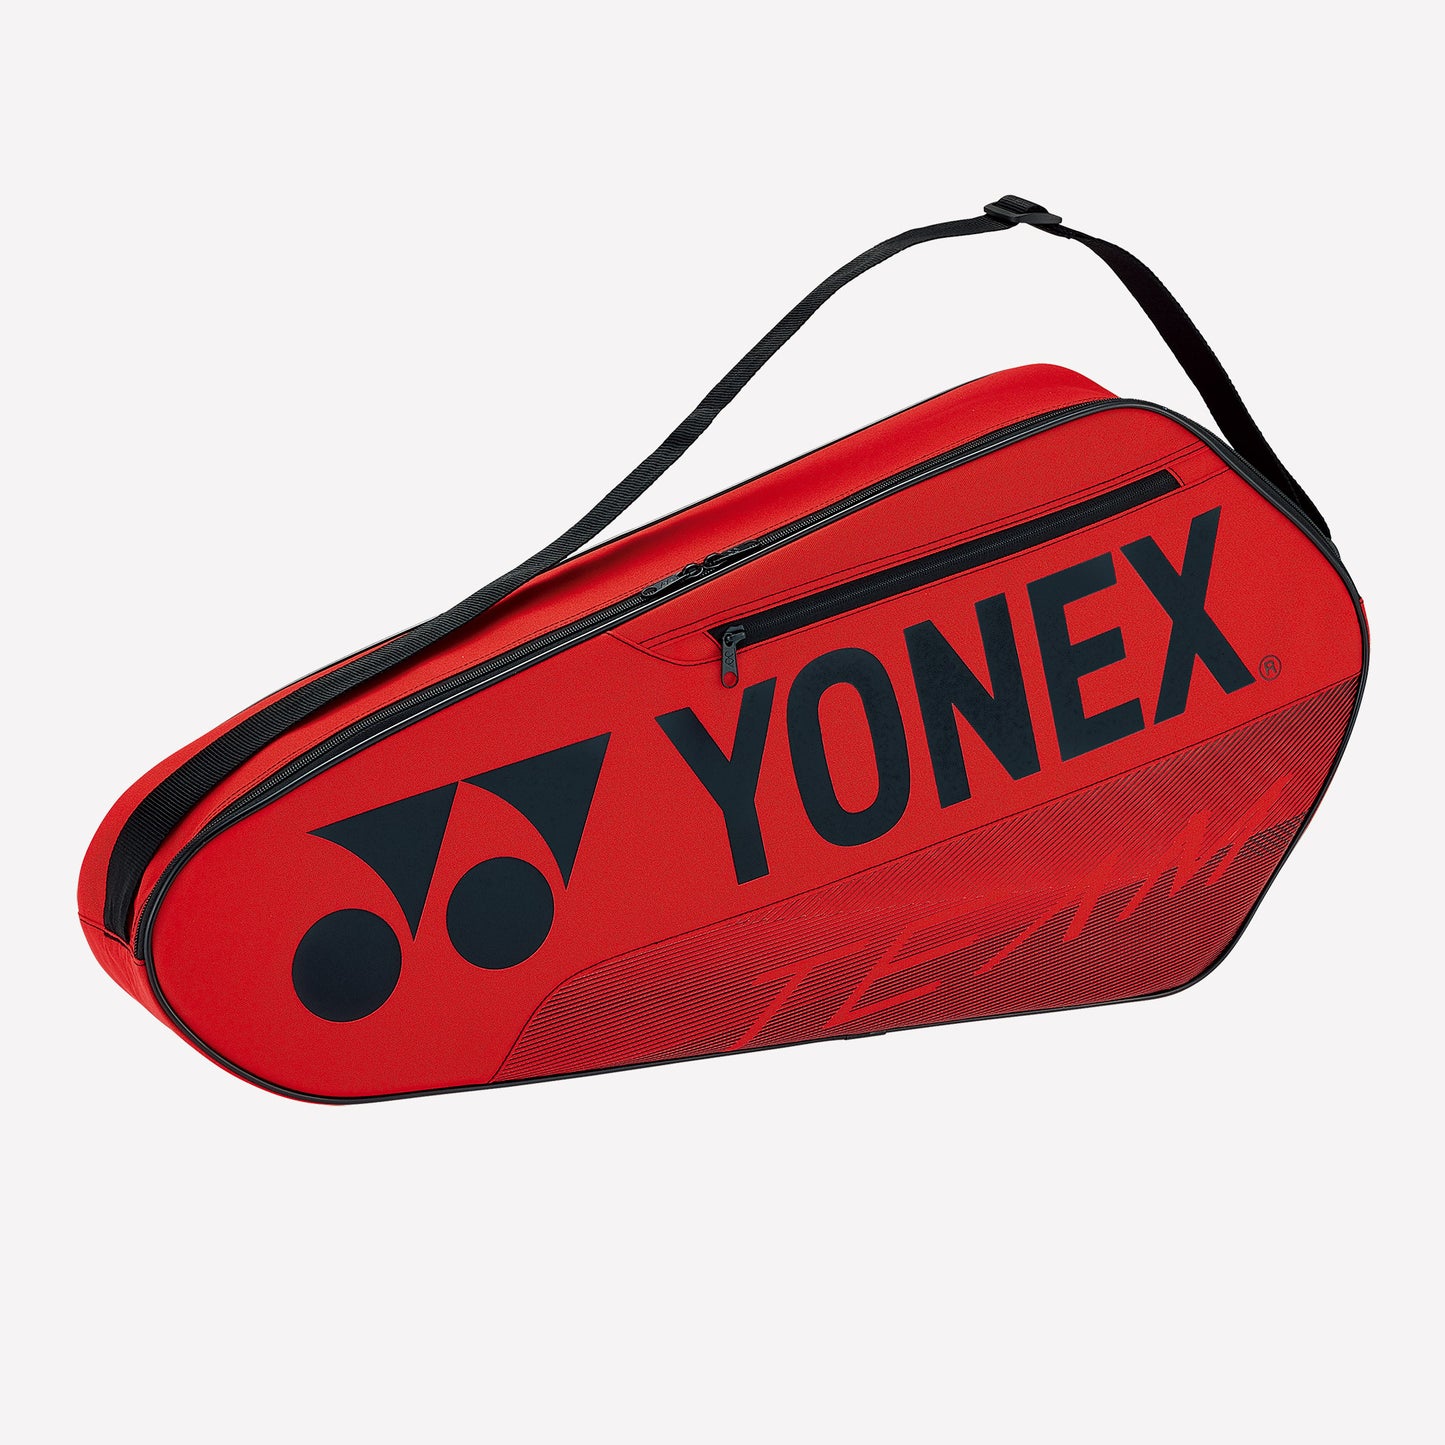 Yonex Team Racket X3 Tennis Bag Red (1)